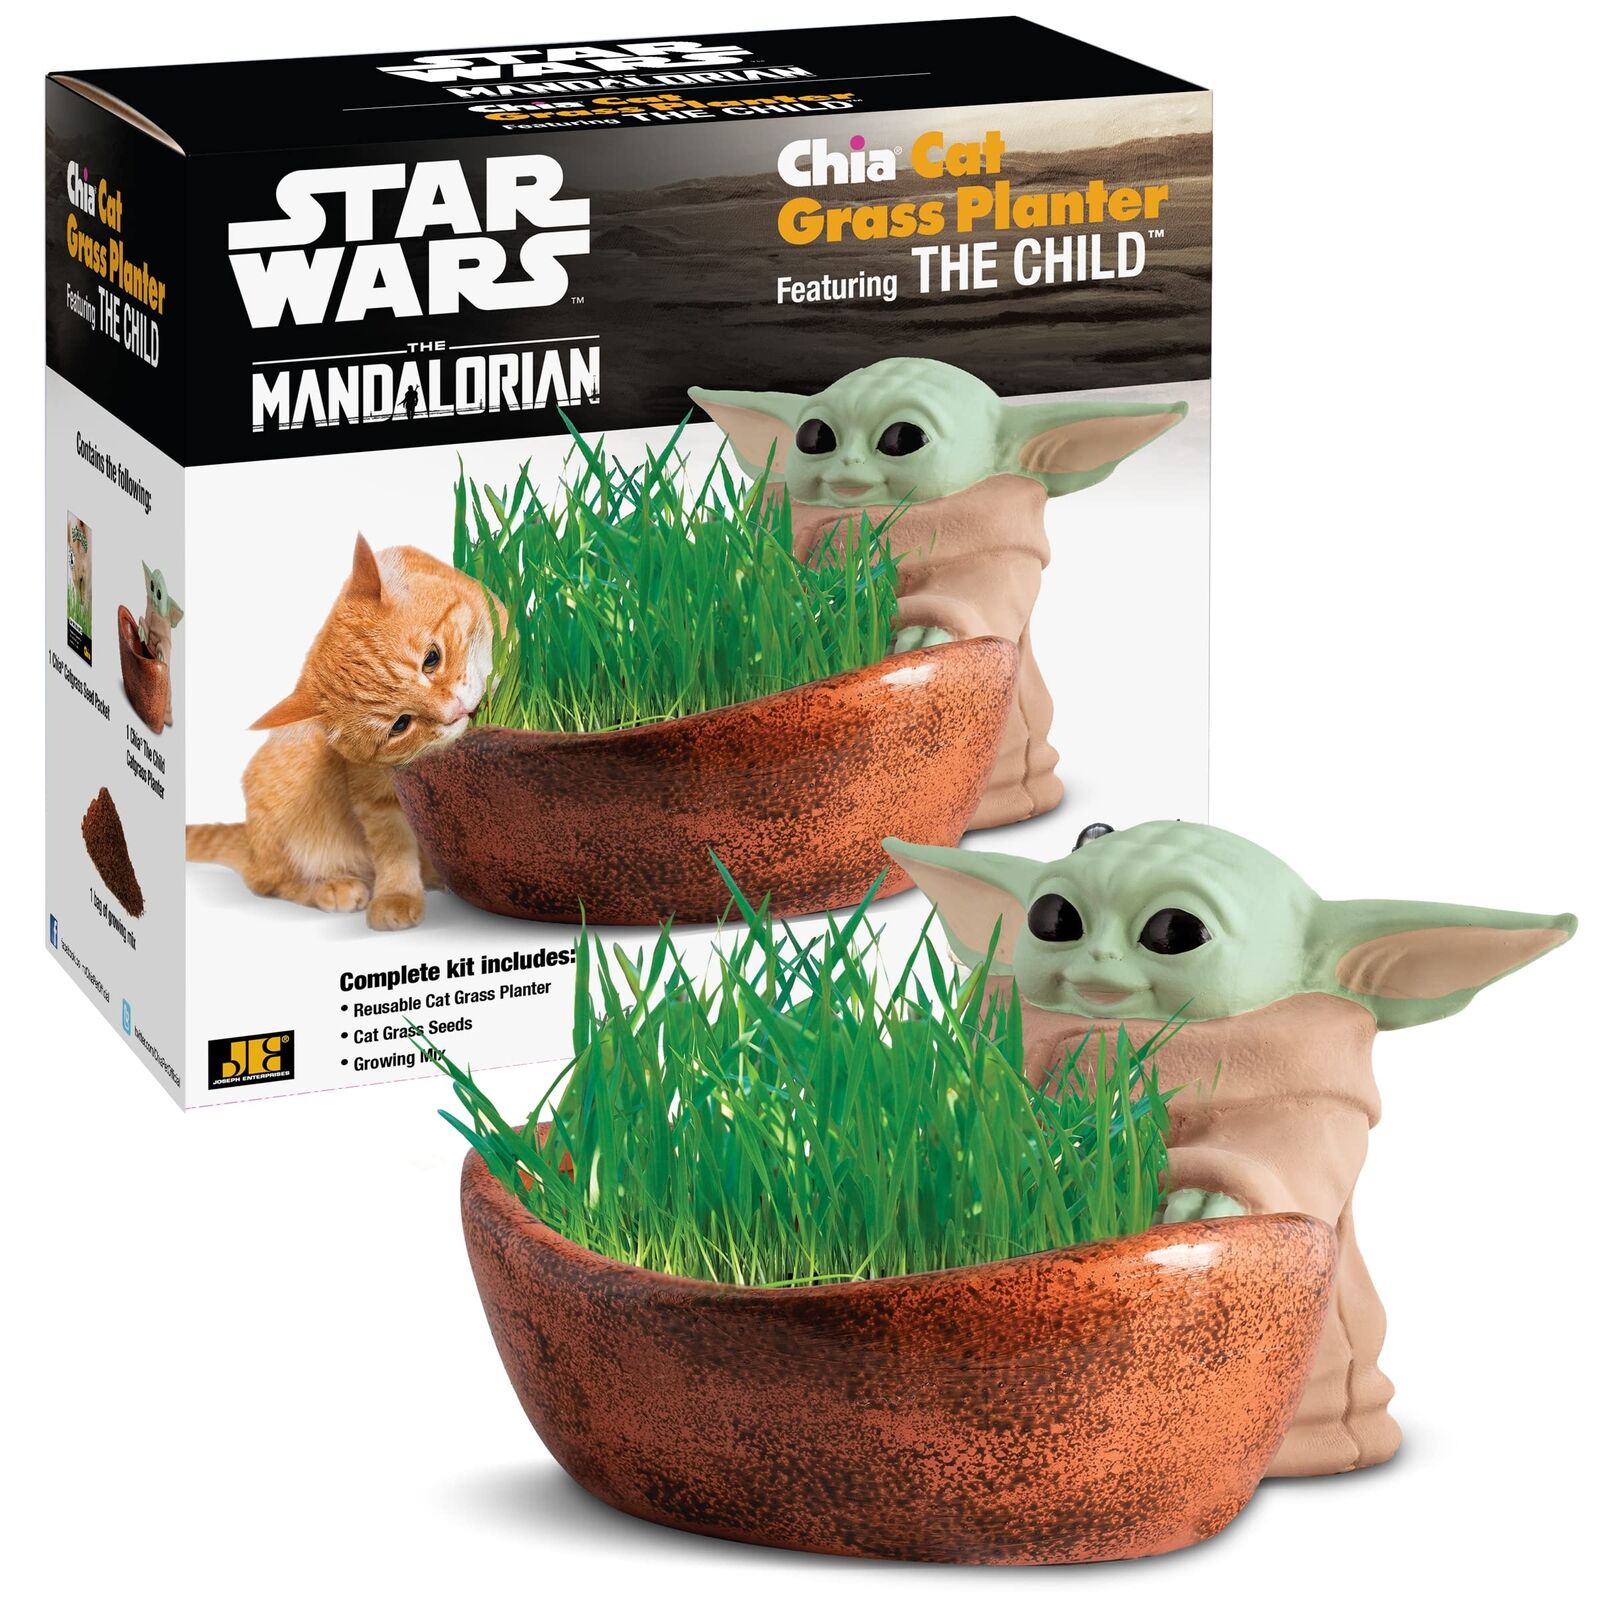 Chia Cat Grass Planter The Child Baby Yoda Star Wars The Mandalorian PI